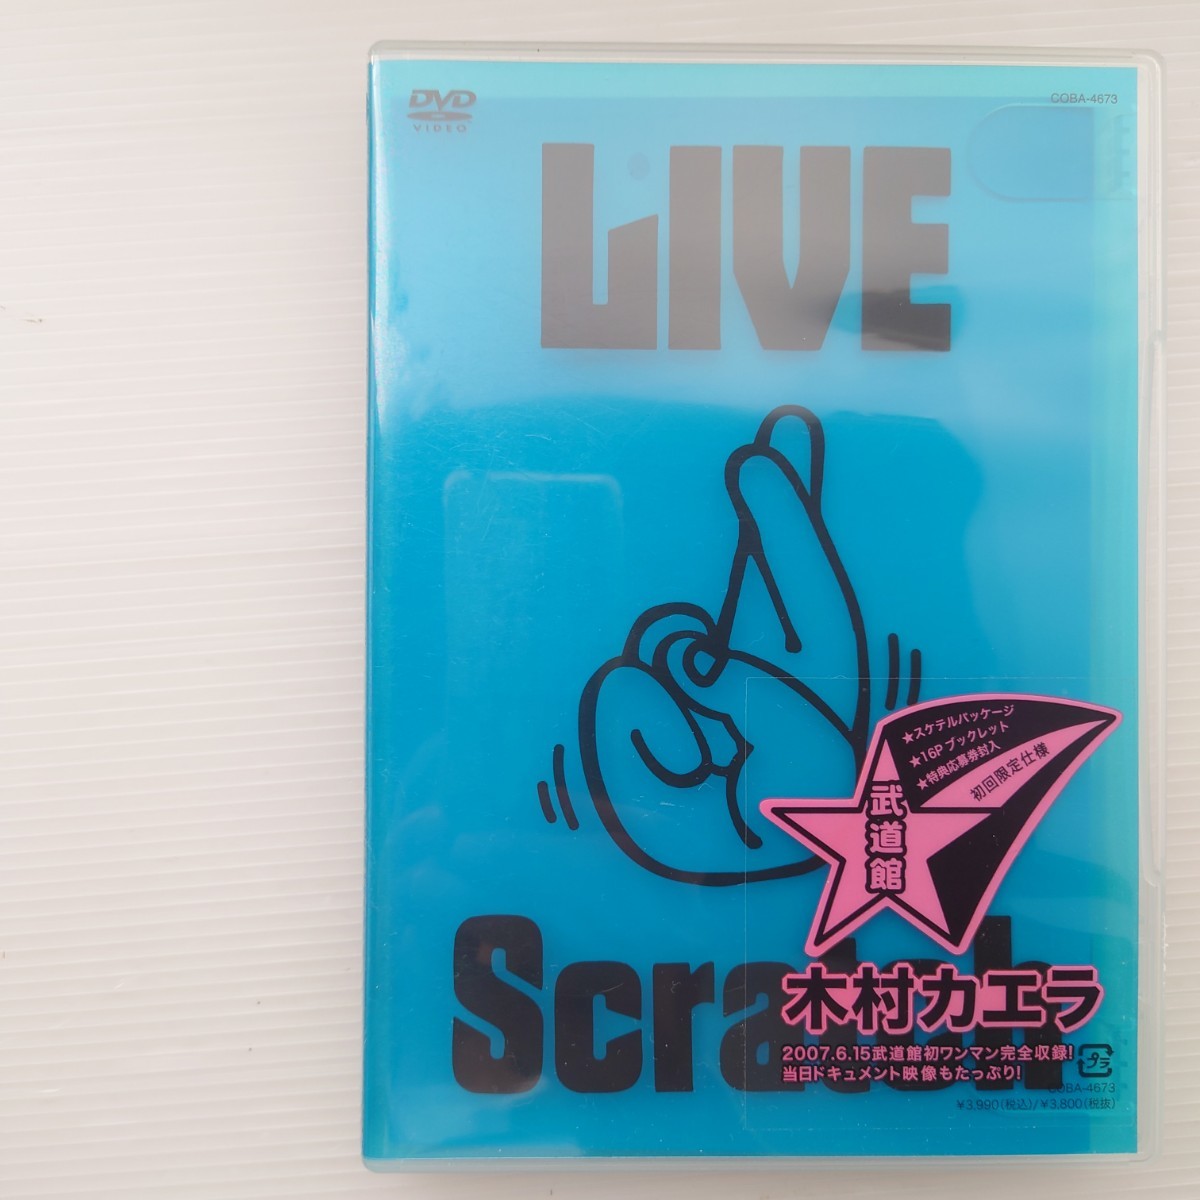 【DVD】木村カエラ/KAERA KIMURA　LIVE Scratch〜上がってますってばTOUR@武道館 2007.6.15【初回限定仕様/エステルパッケージ/16Pブック】_画像1